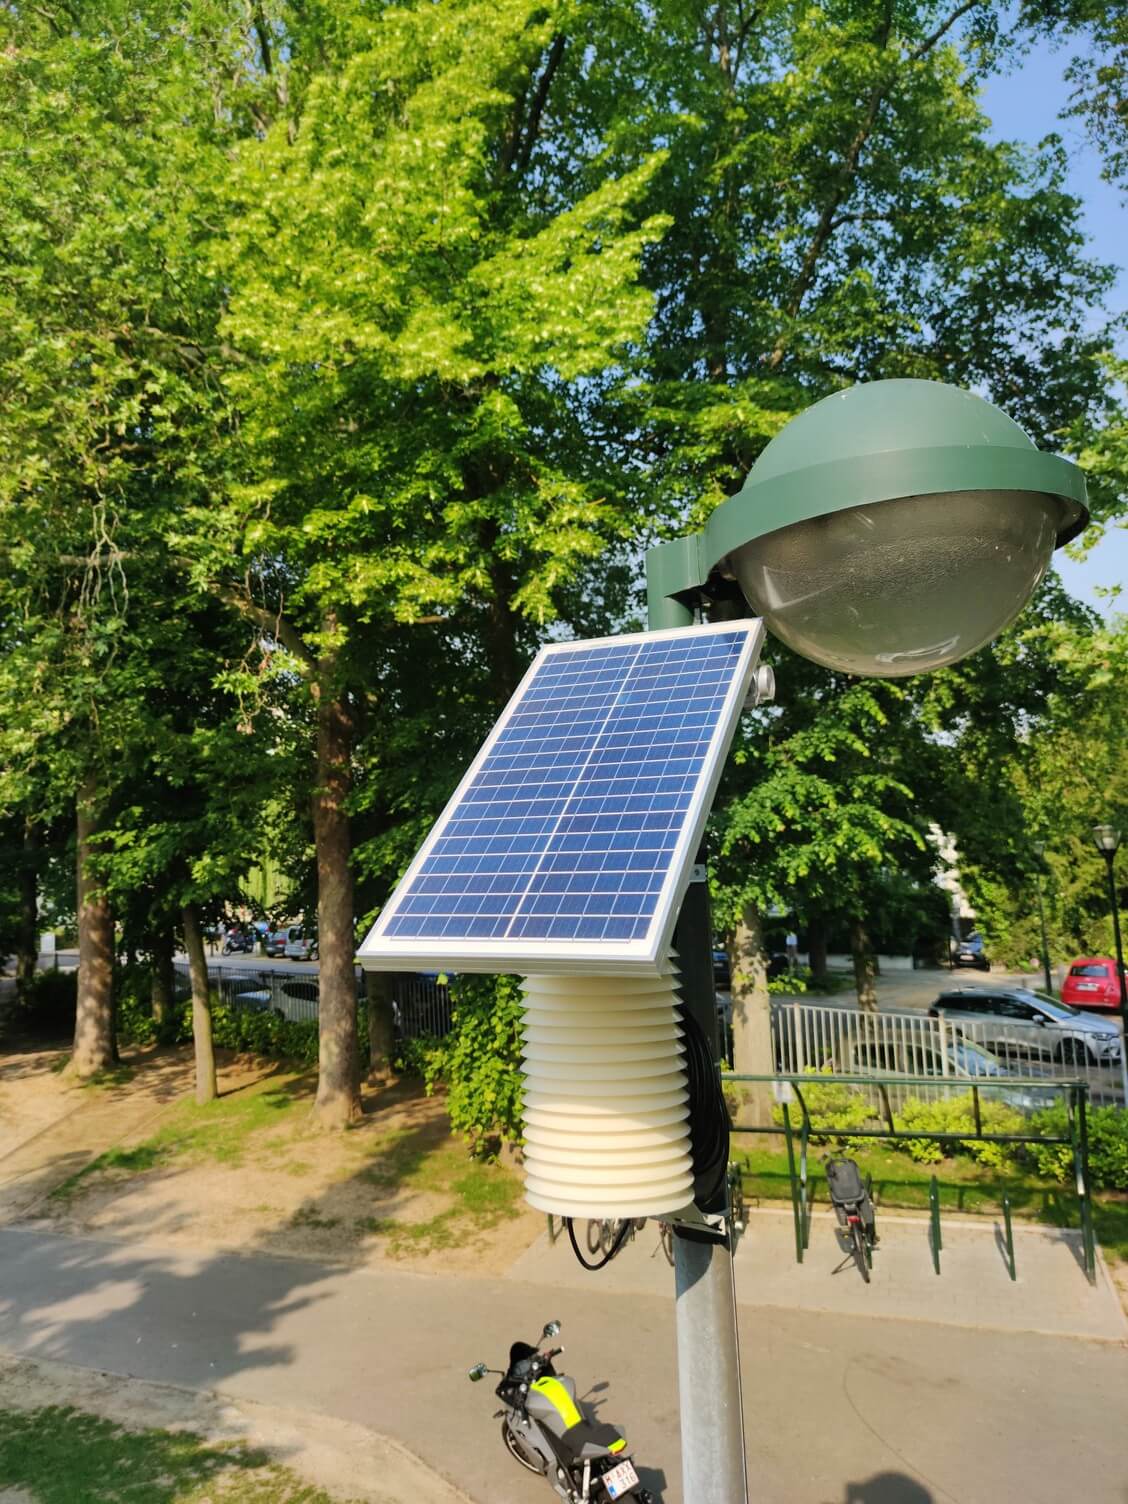 Airscan outdoor monitoring station